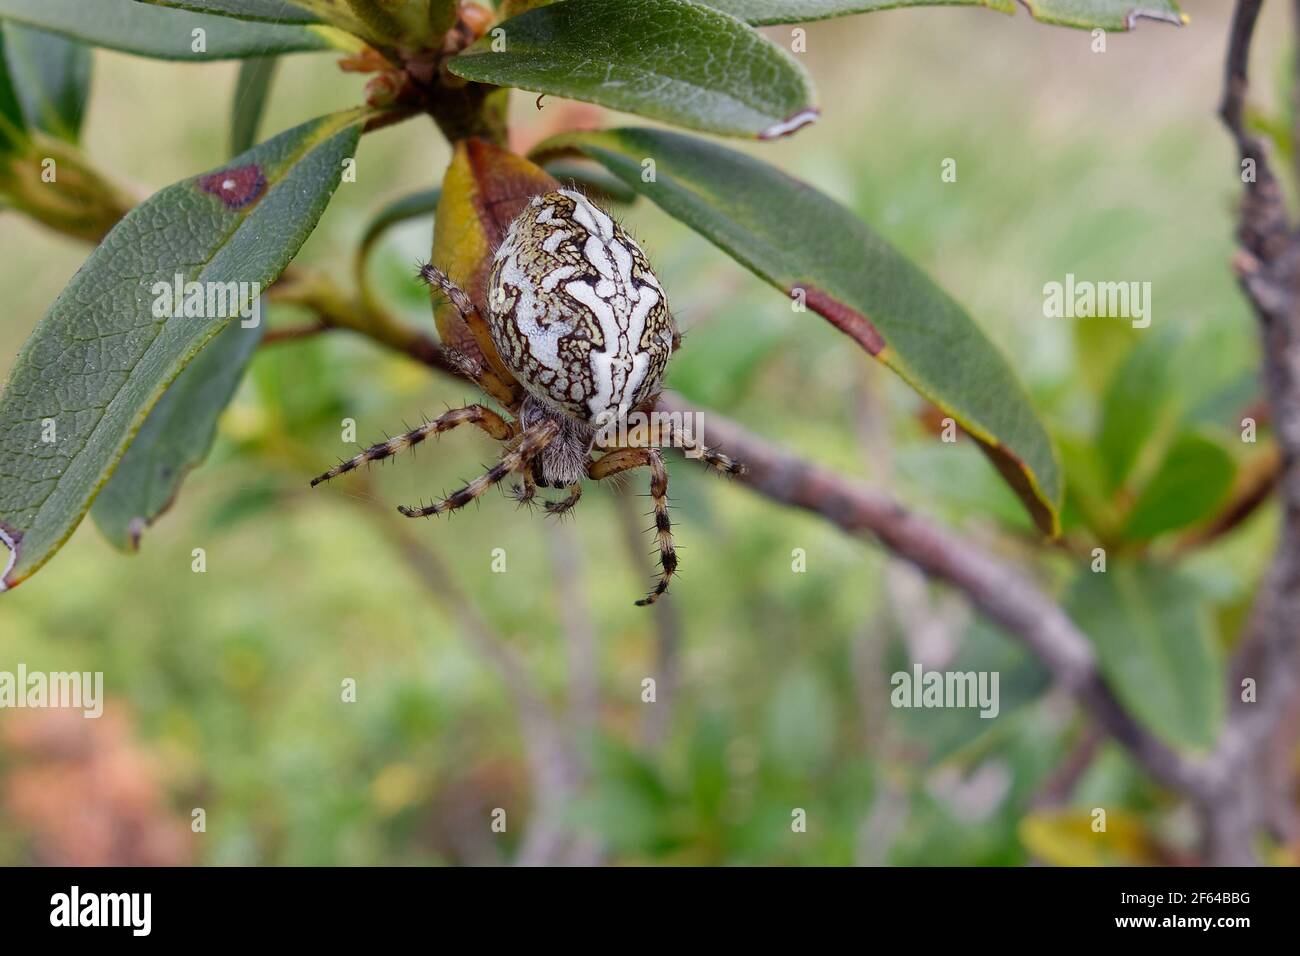 Oak spider (Aculepeira ceropegia) hanging on a thread Stock Photo